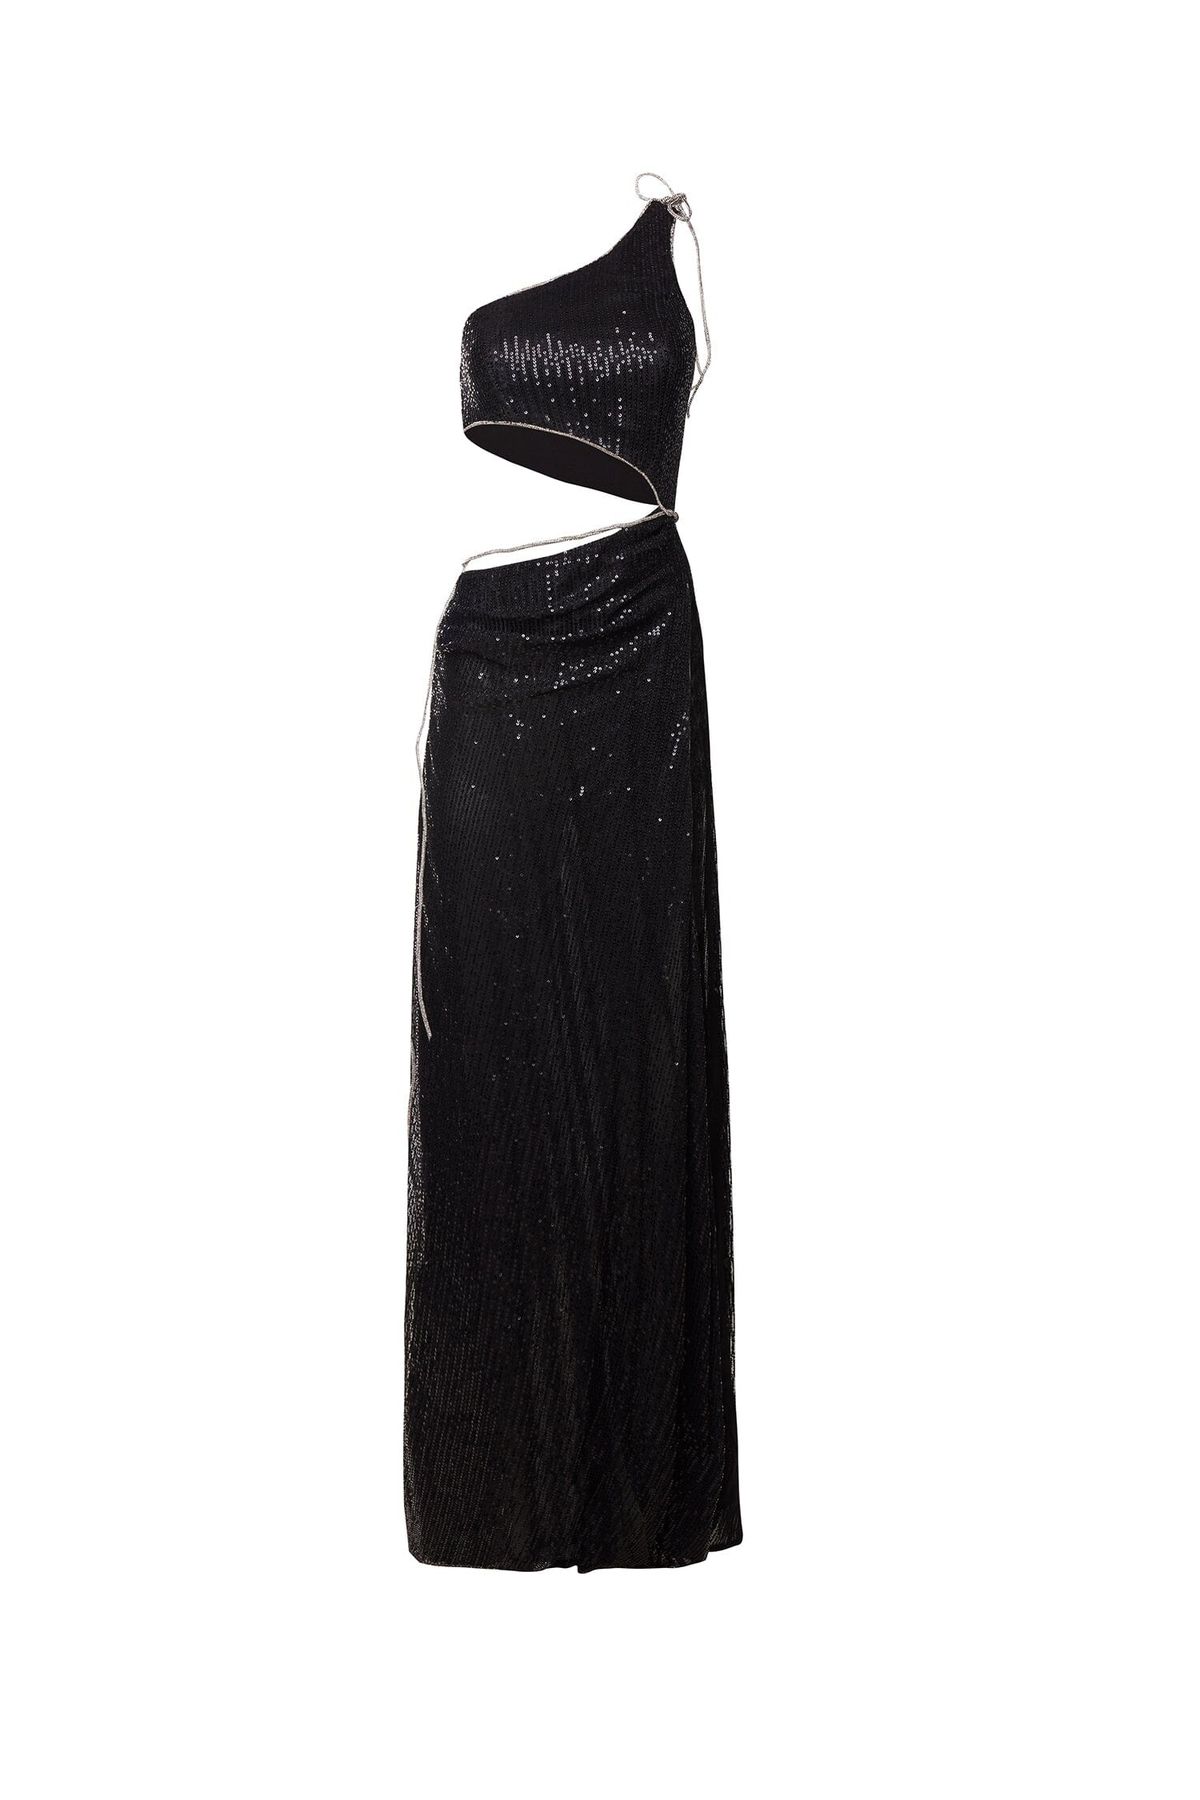 Style Dinah Alamour The Label Size M One Shoulder Black Side Slit Dress on Queenly